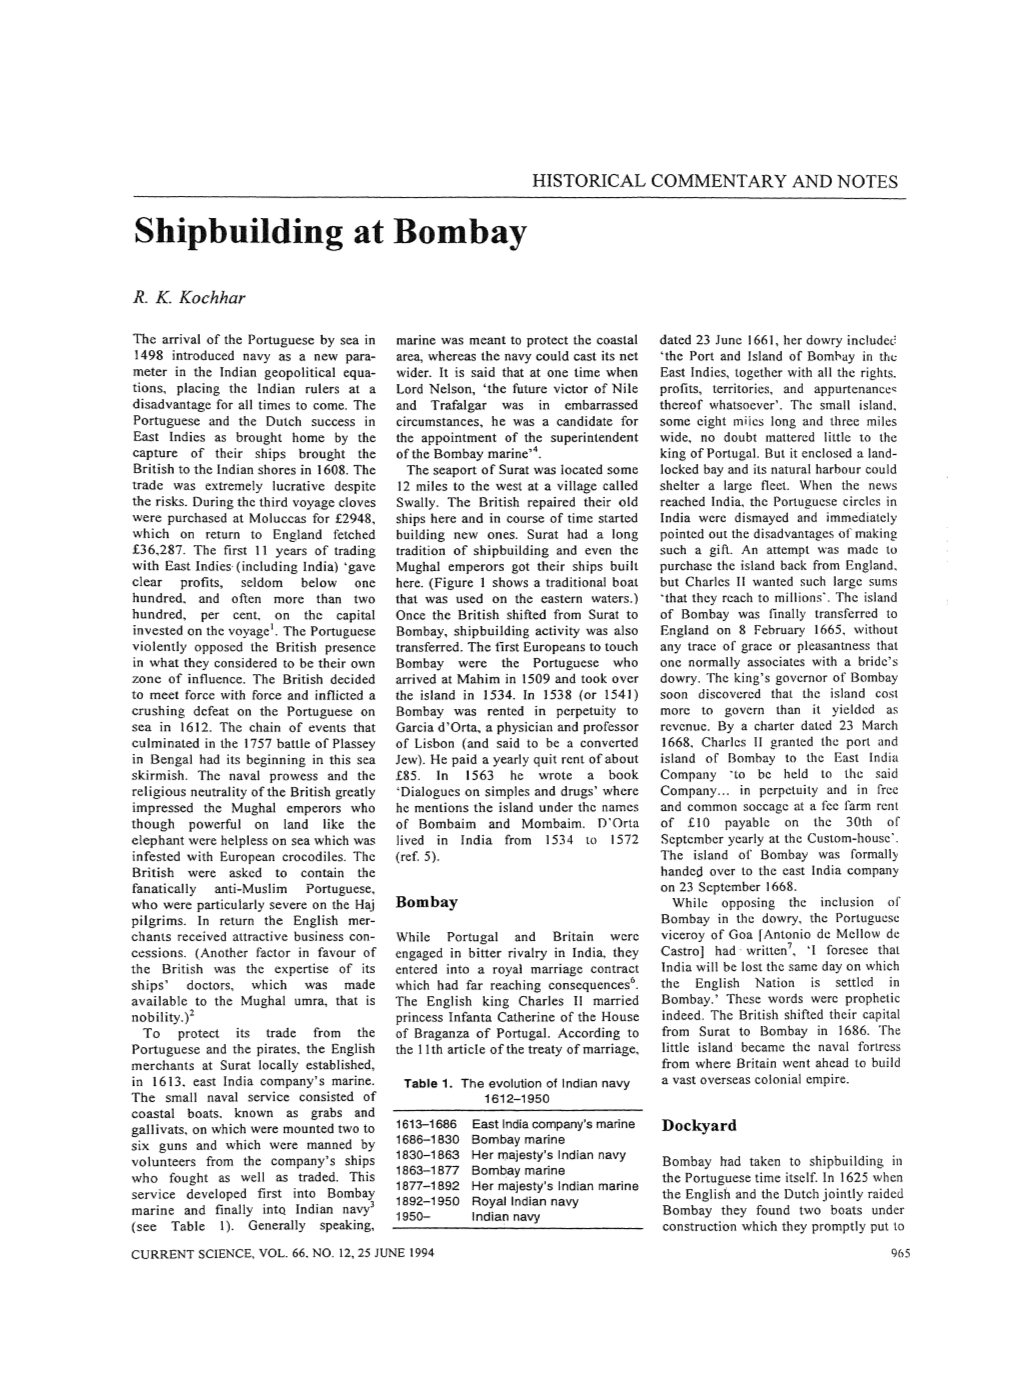 Shipbuilding at Bombay